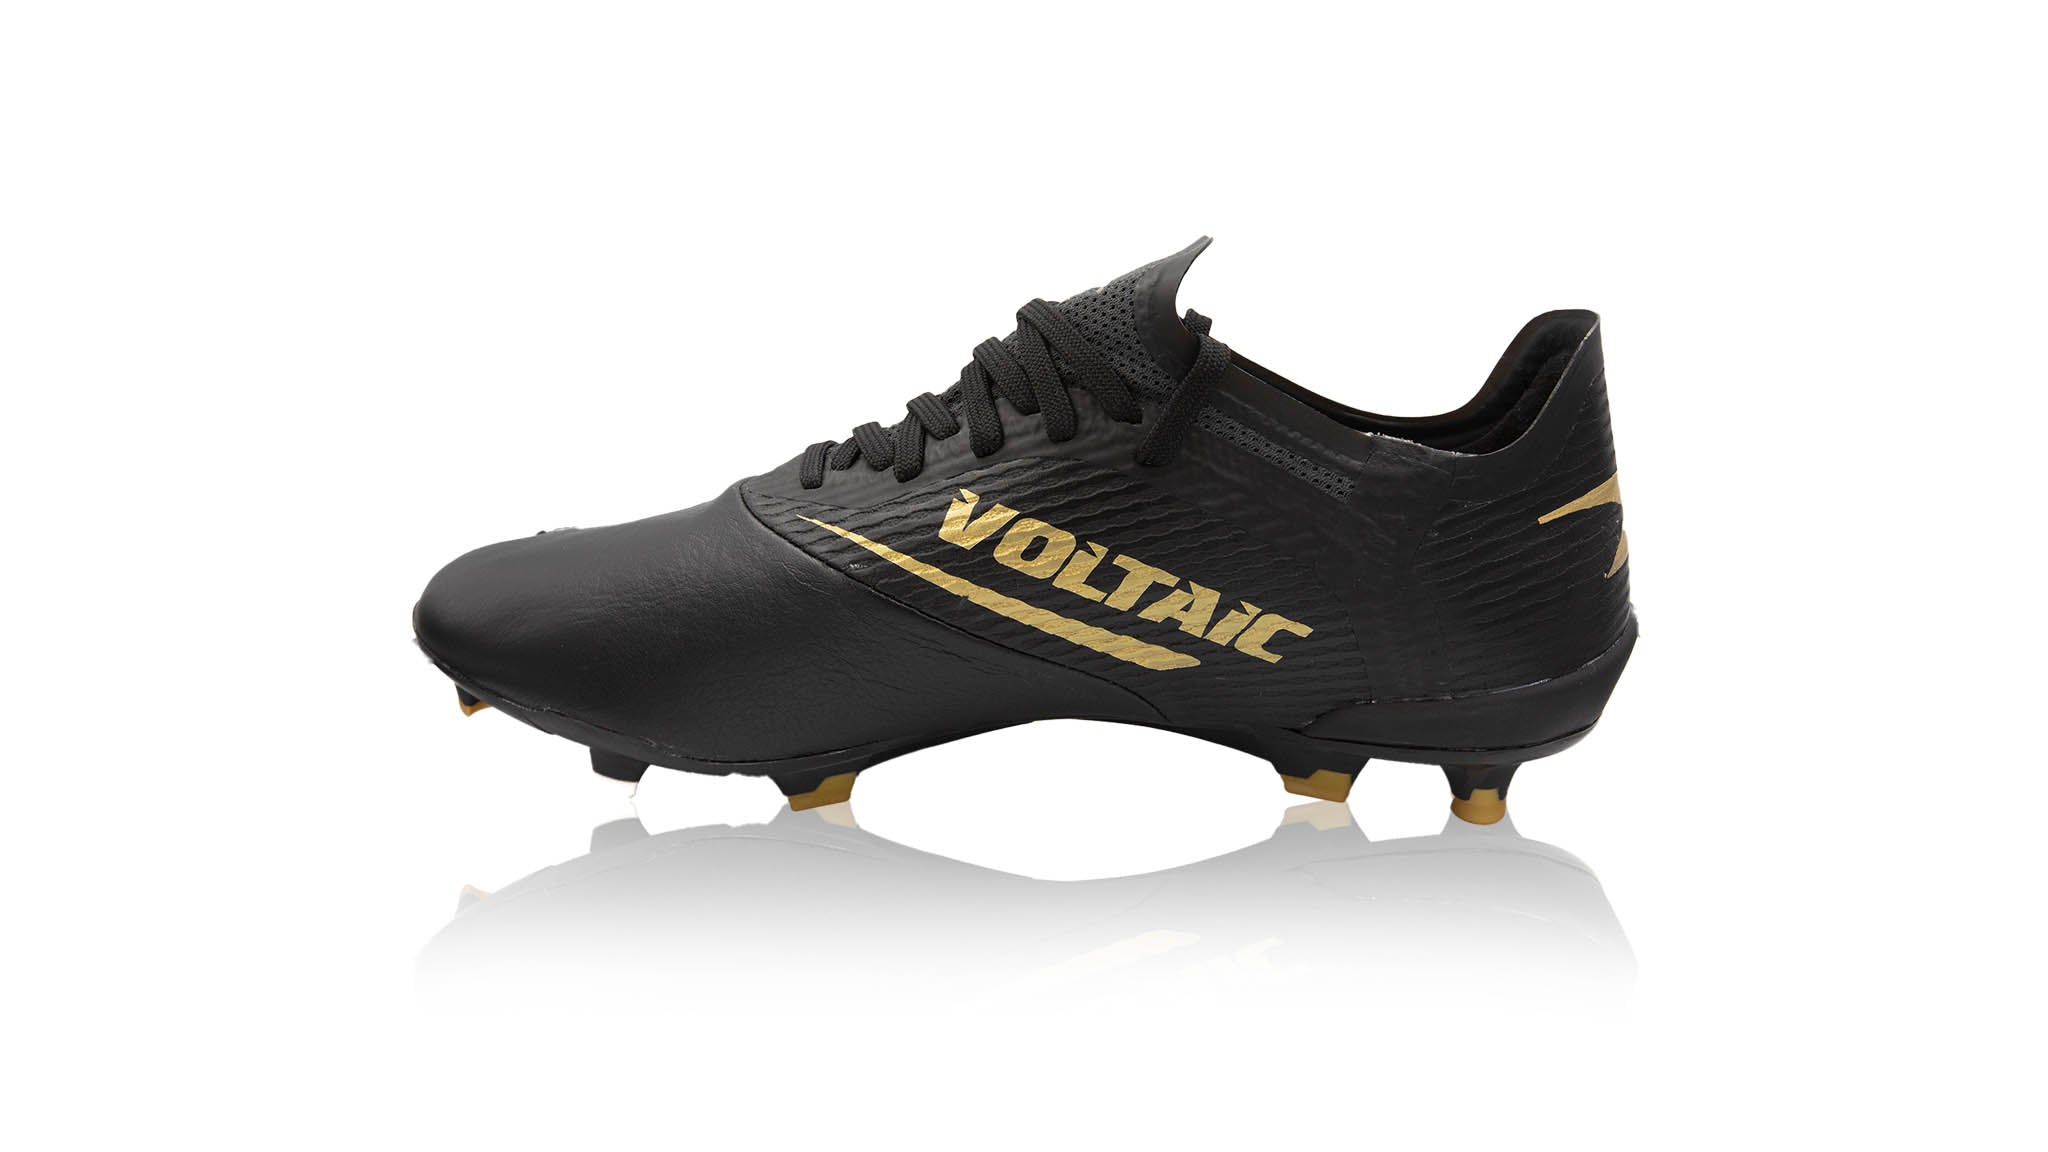 Voltaic Elite Men's Football Boots